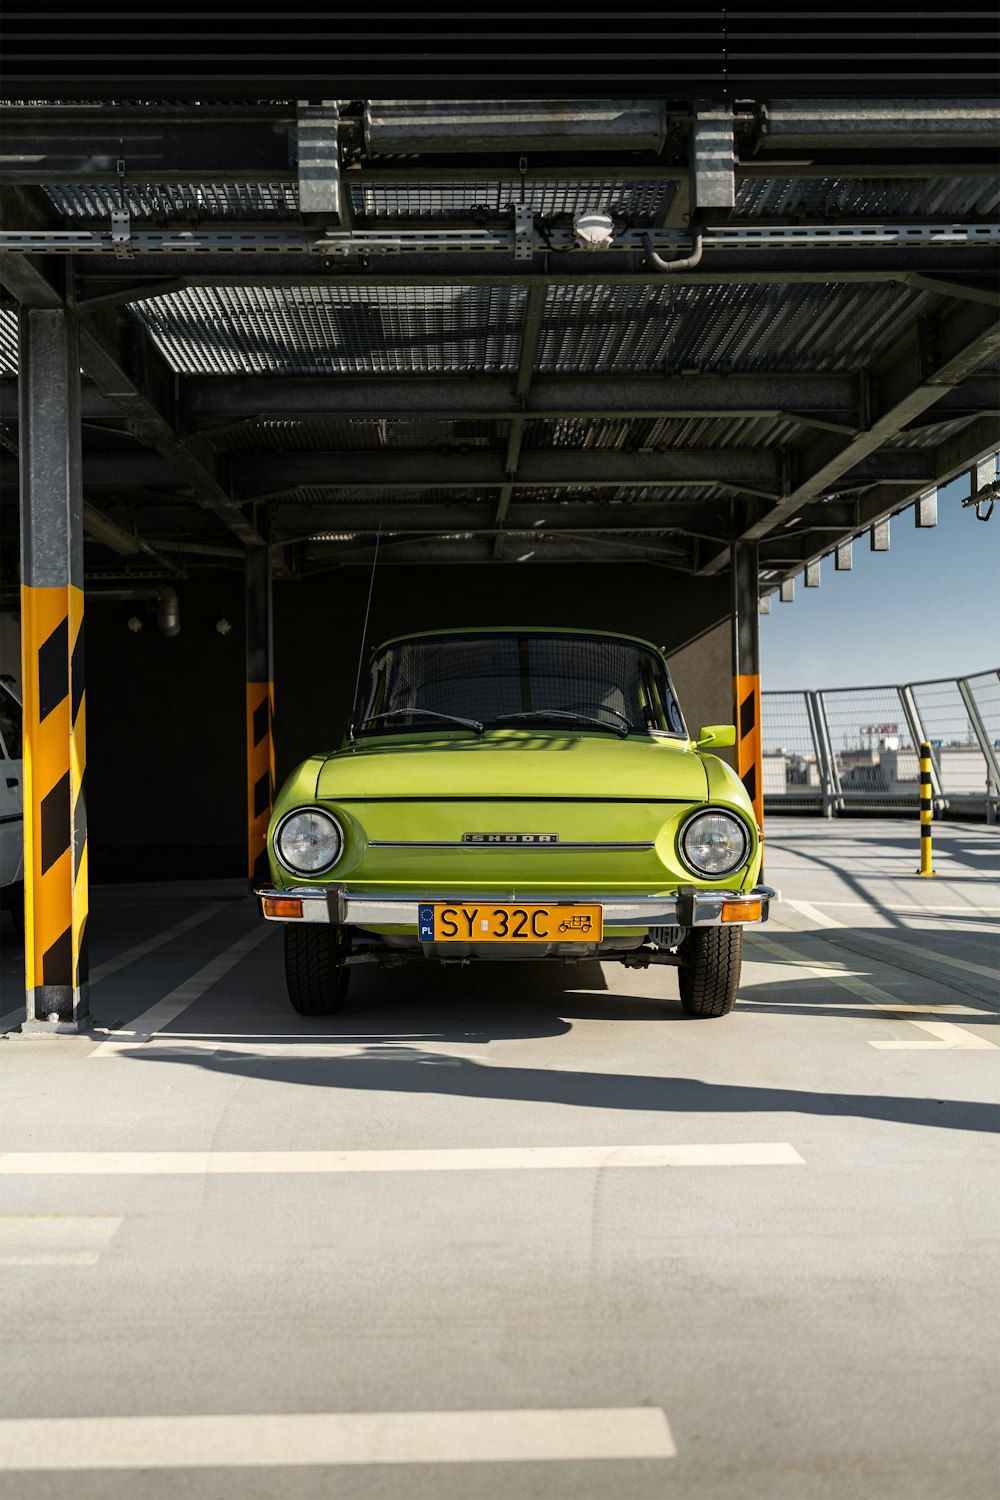 a green car parked in a parking garage